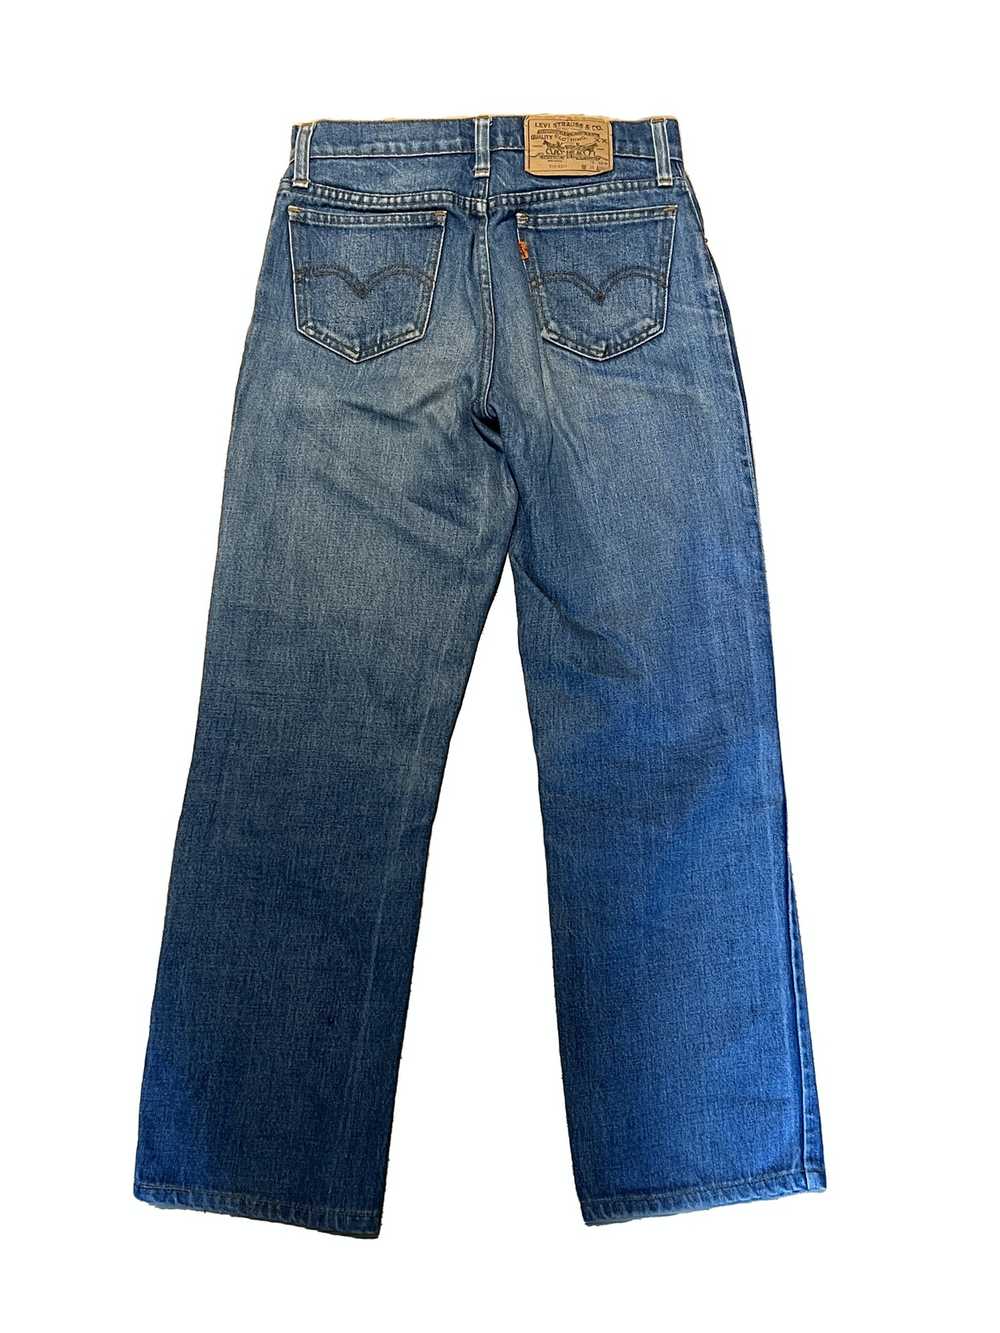 Levi's Levi's 515 Light Blue Jeans - image 2